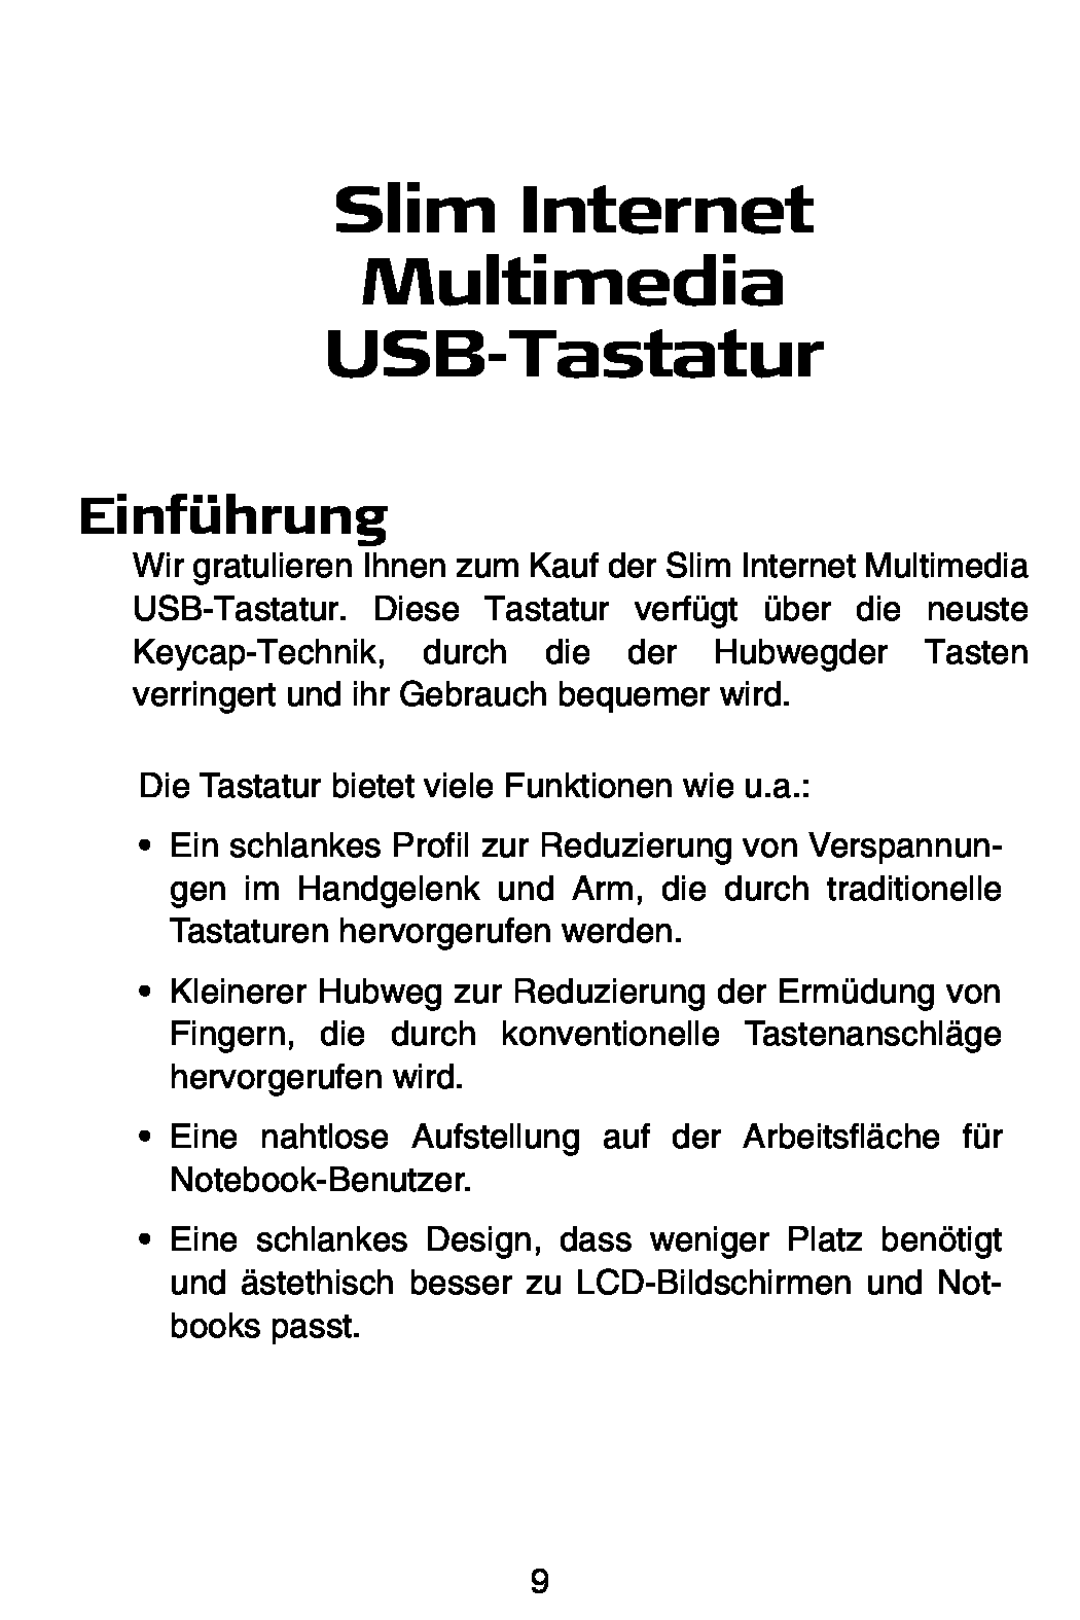 Targus slim internet multimedia USB keyboard specifications Slim Internet Multimedia USB-Tastatur, Einführung 